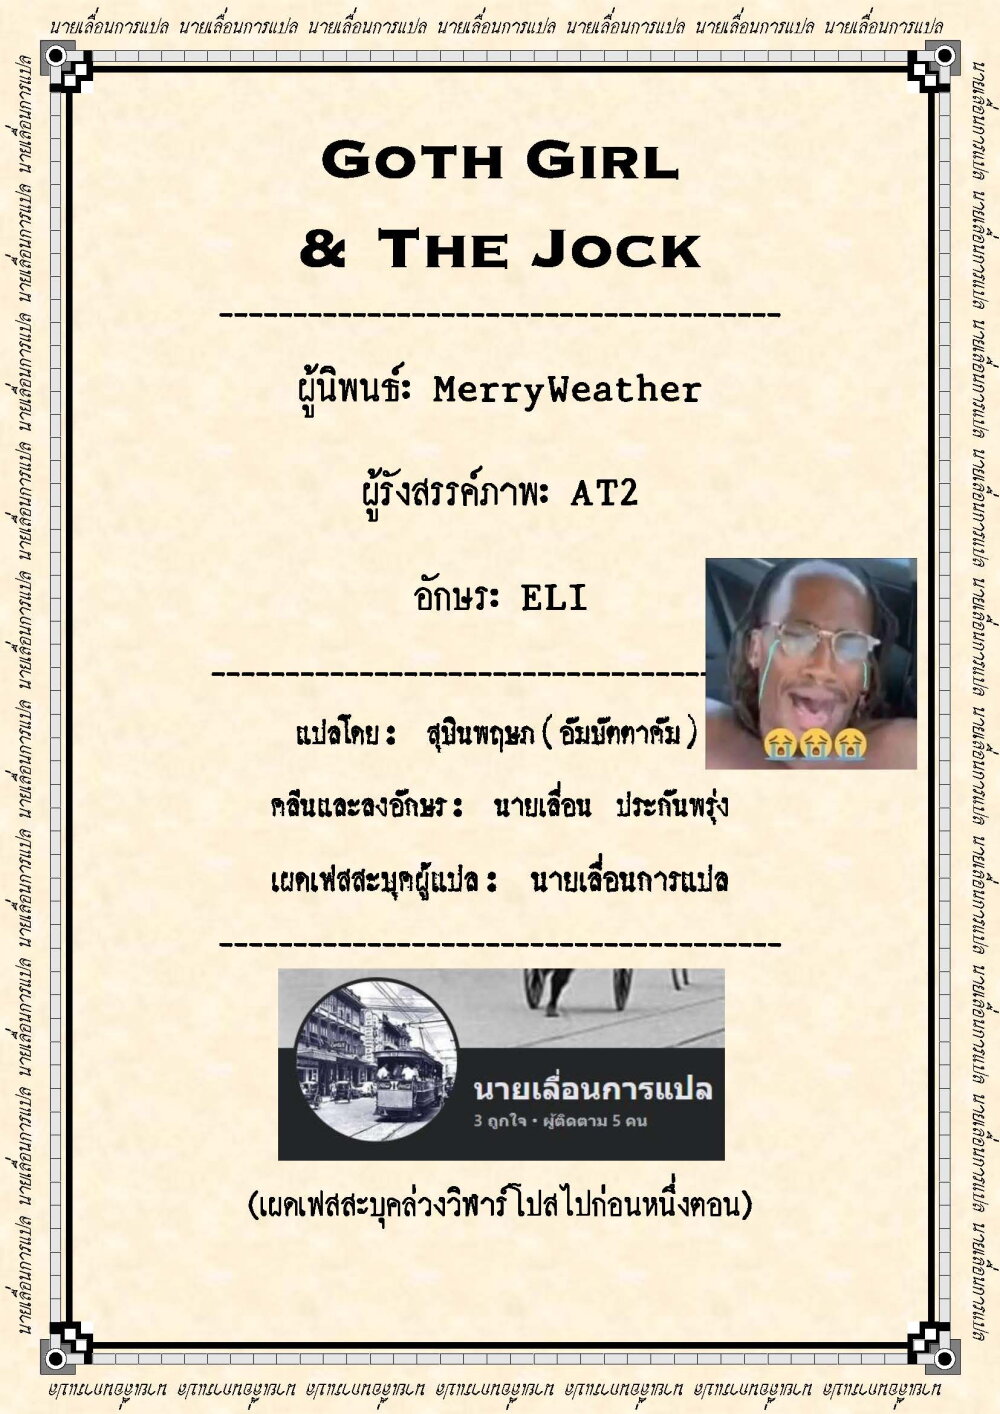 Goth Girl & The Jock 25 11